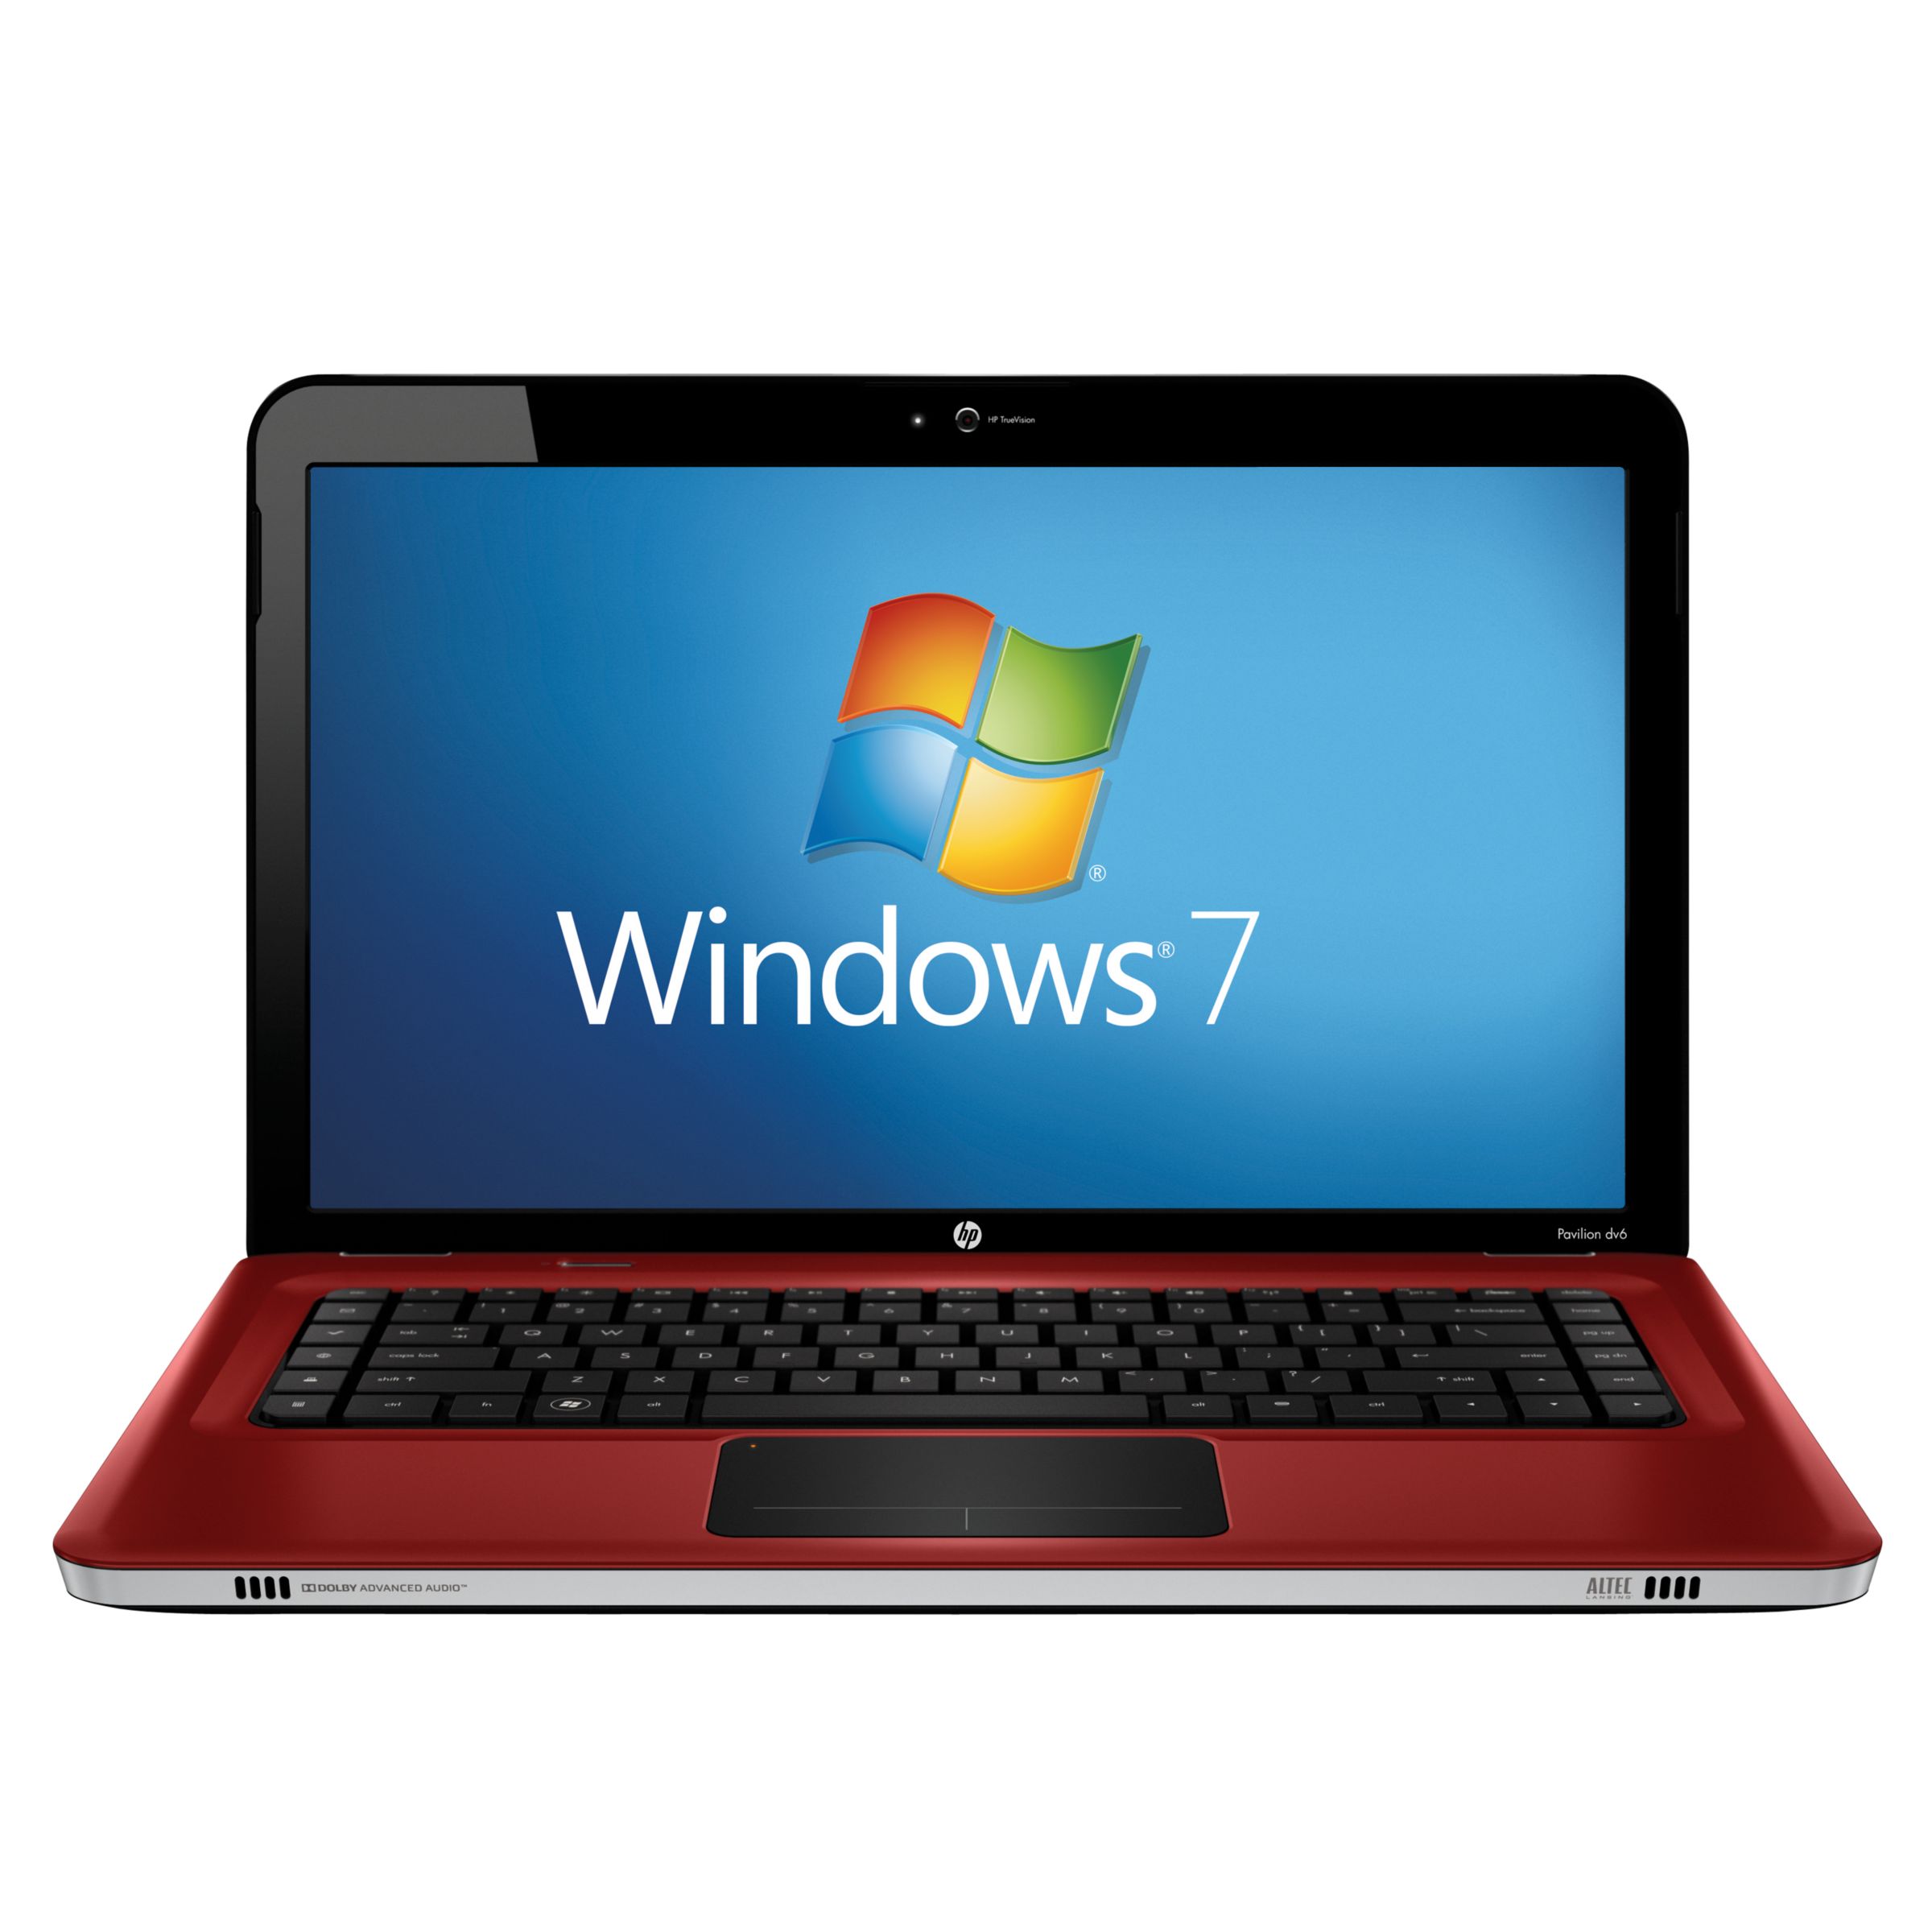 HP Pavilion DV6-3117SA Laptop, AMD Phenom, 320GB, 2.8GHz, 4GB RAM with 15.6 Inch Display, Red at John Lewis